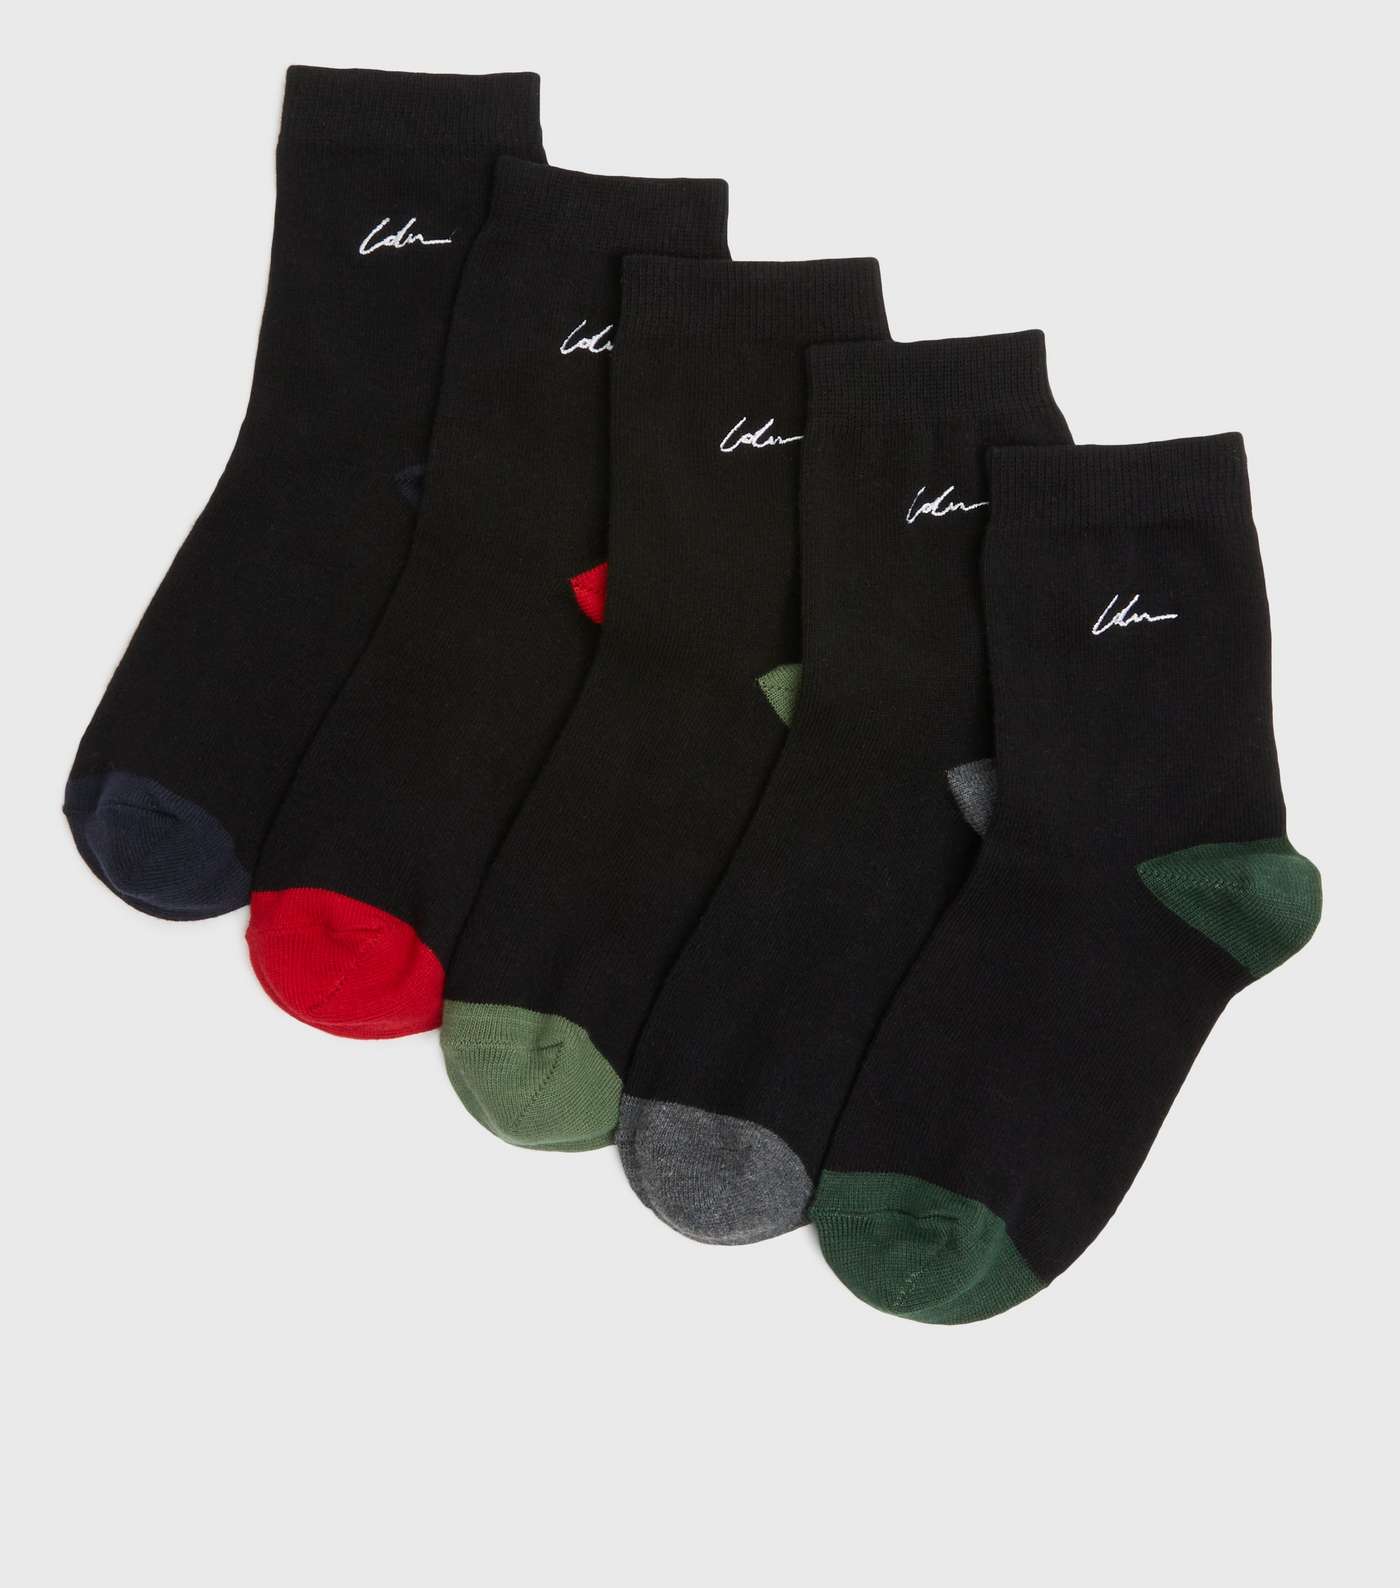 Boys 5 Pack Black LDN Embroidered Socks